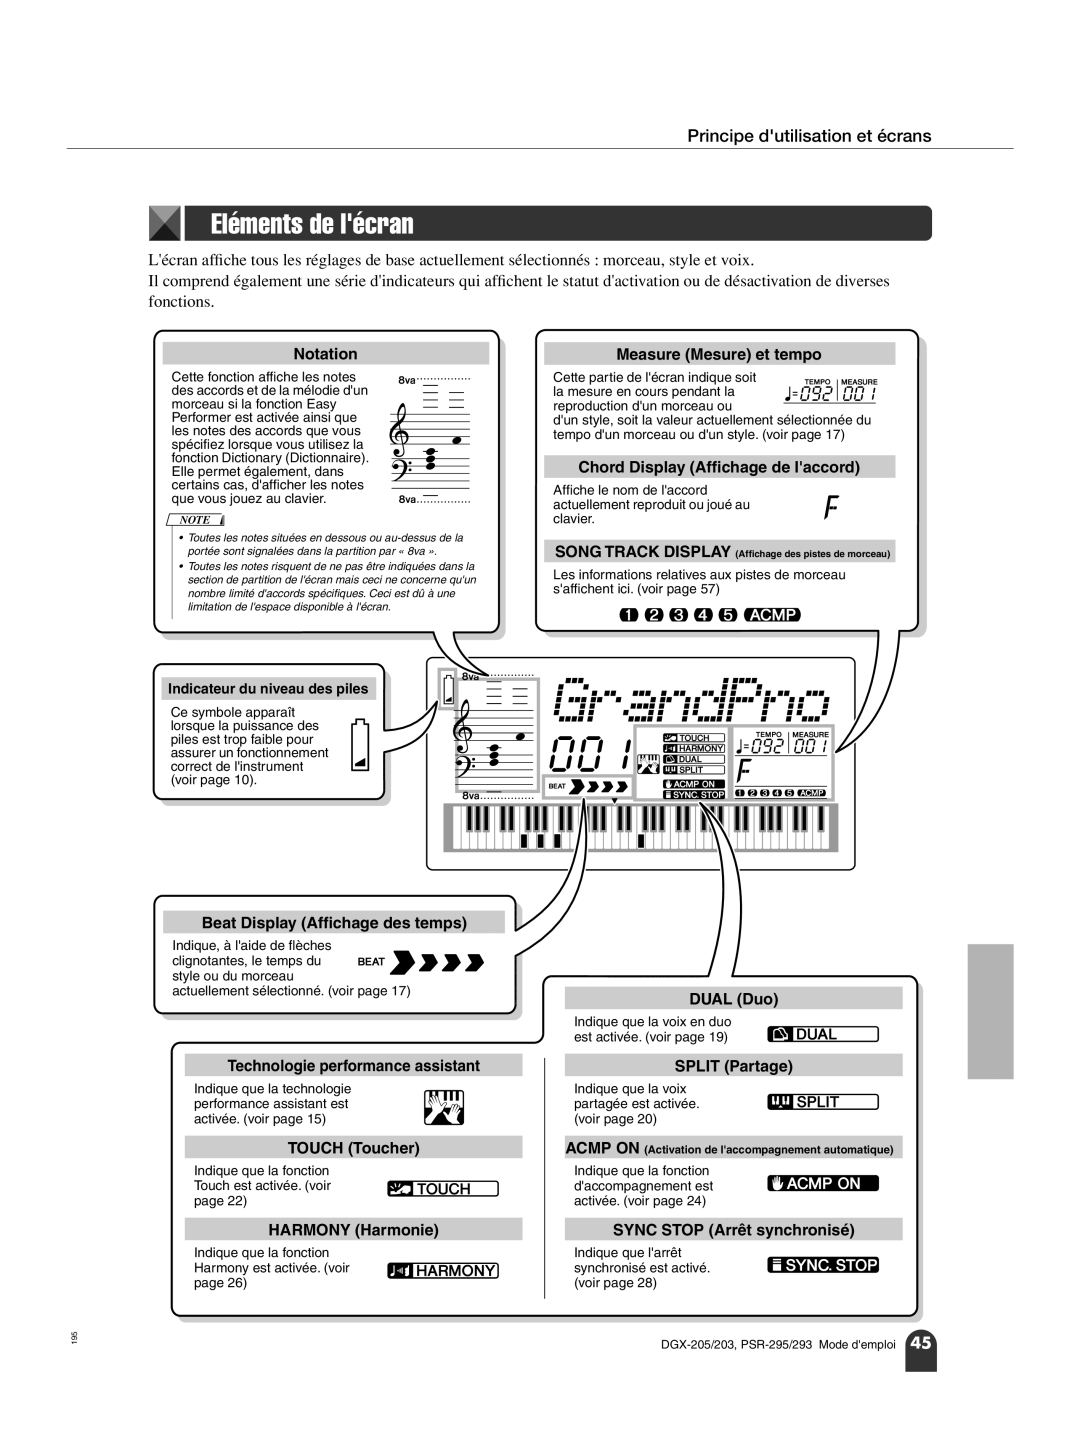 Yamaha PORTATONE PSR-295, PORTATONE PSR-293 owner manual Eléments de lécran, GrandPno, Principe dutilisation et écrans 